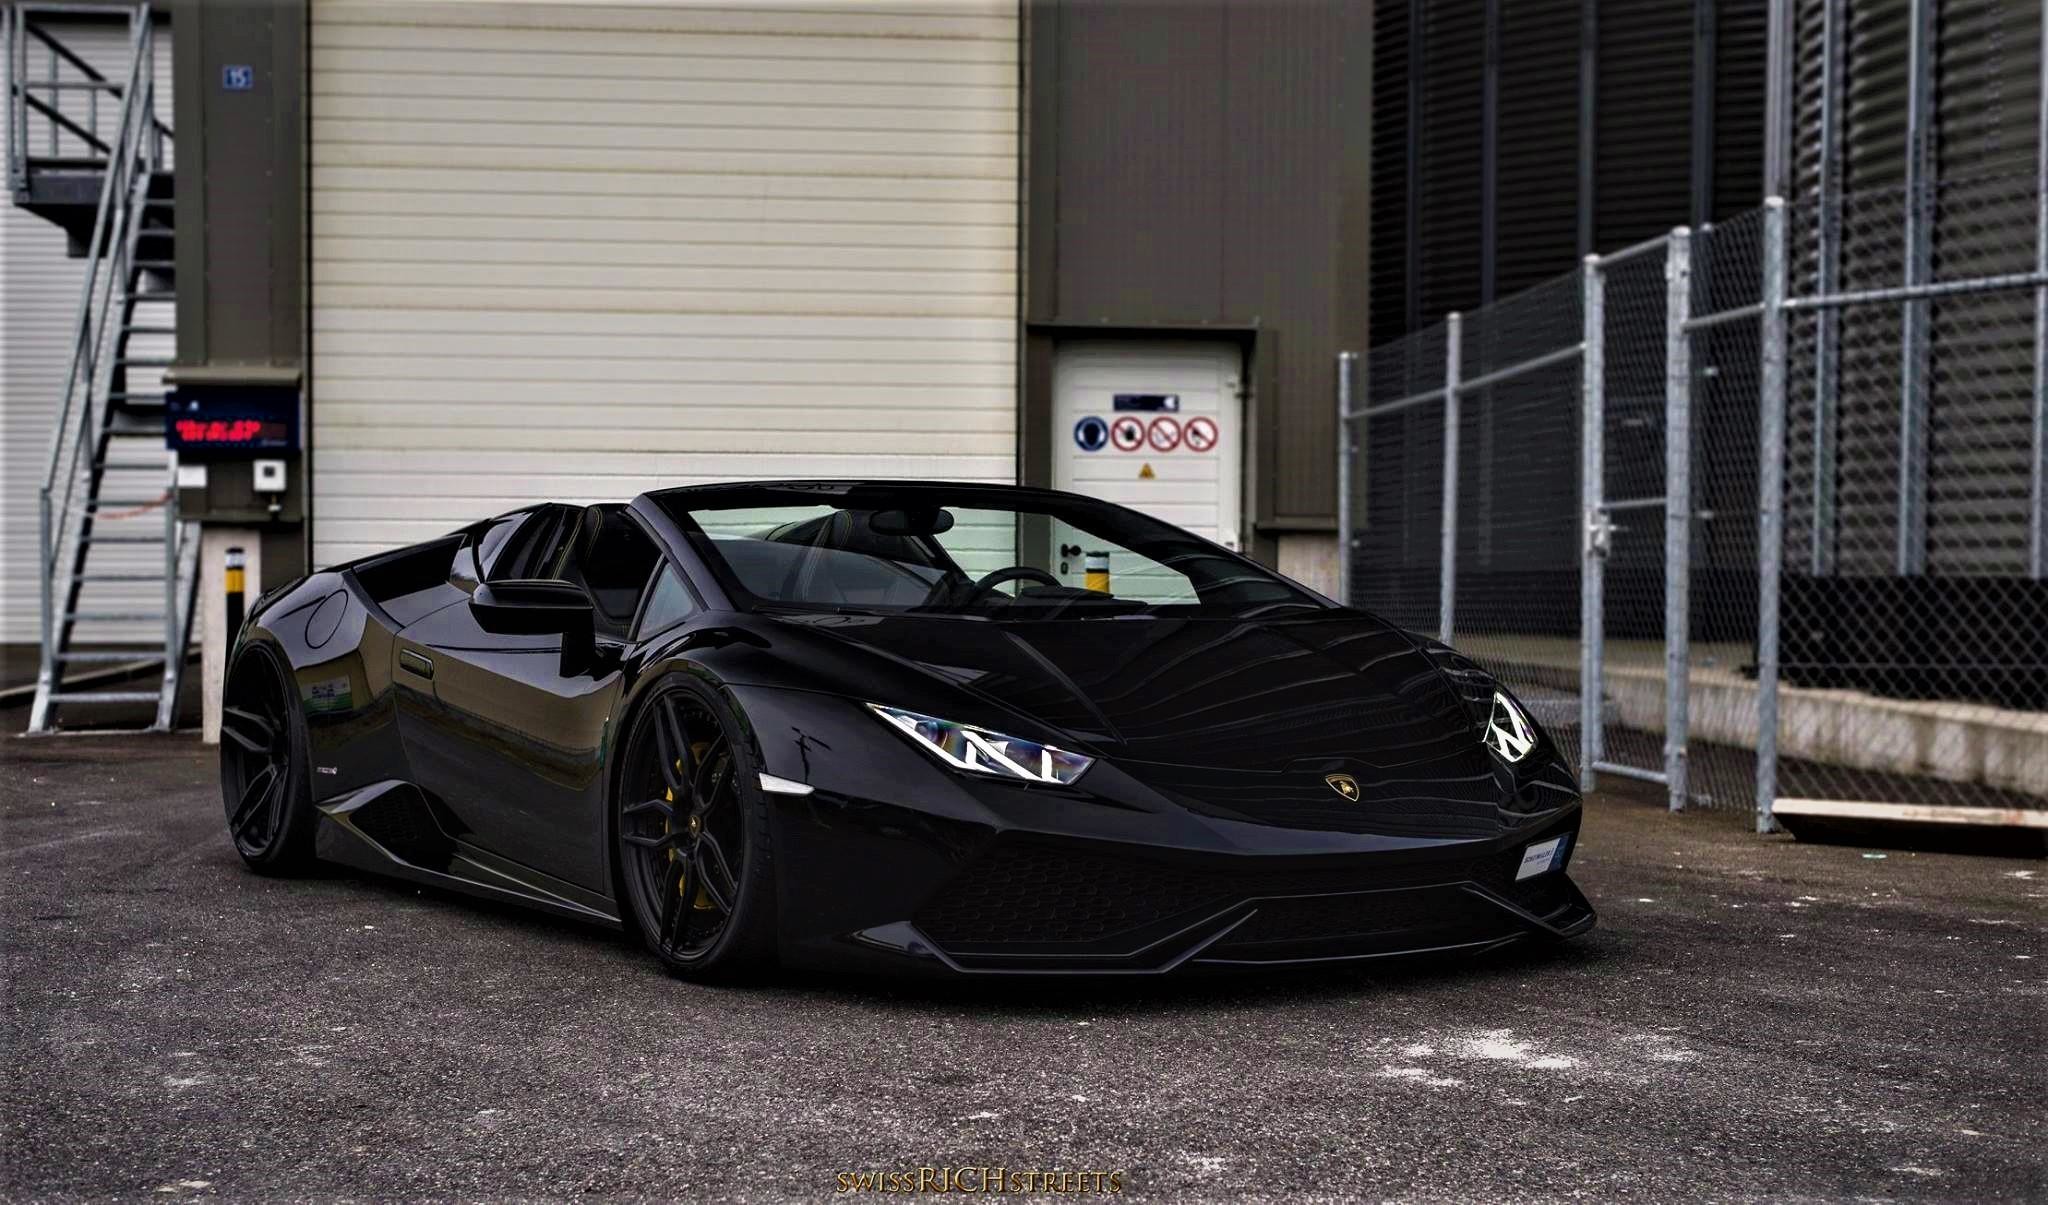 2048x1205 Lamborghini Huracan all black everything wallpaper/ background for iPad  mini/ air/ 2 / pro/ laptop